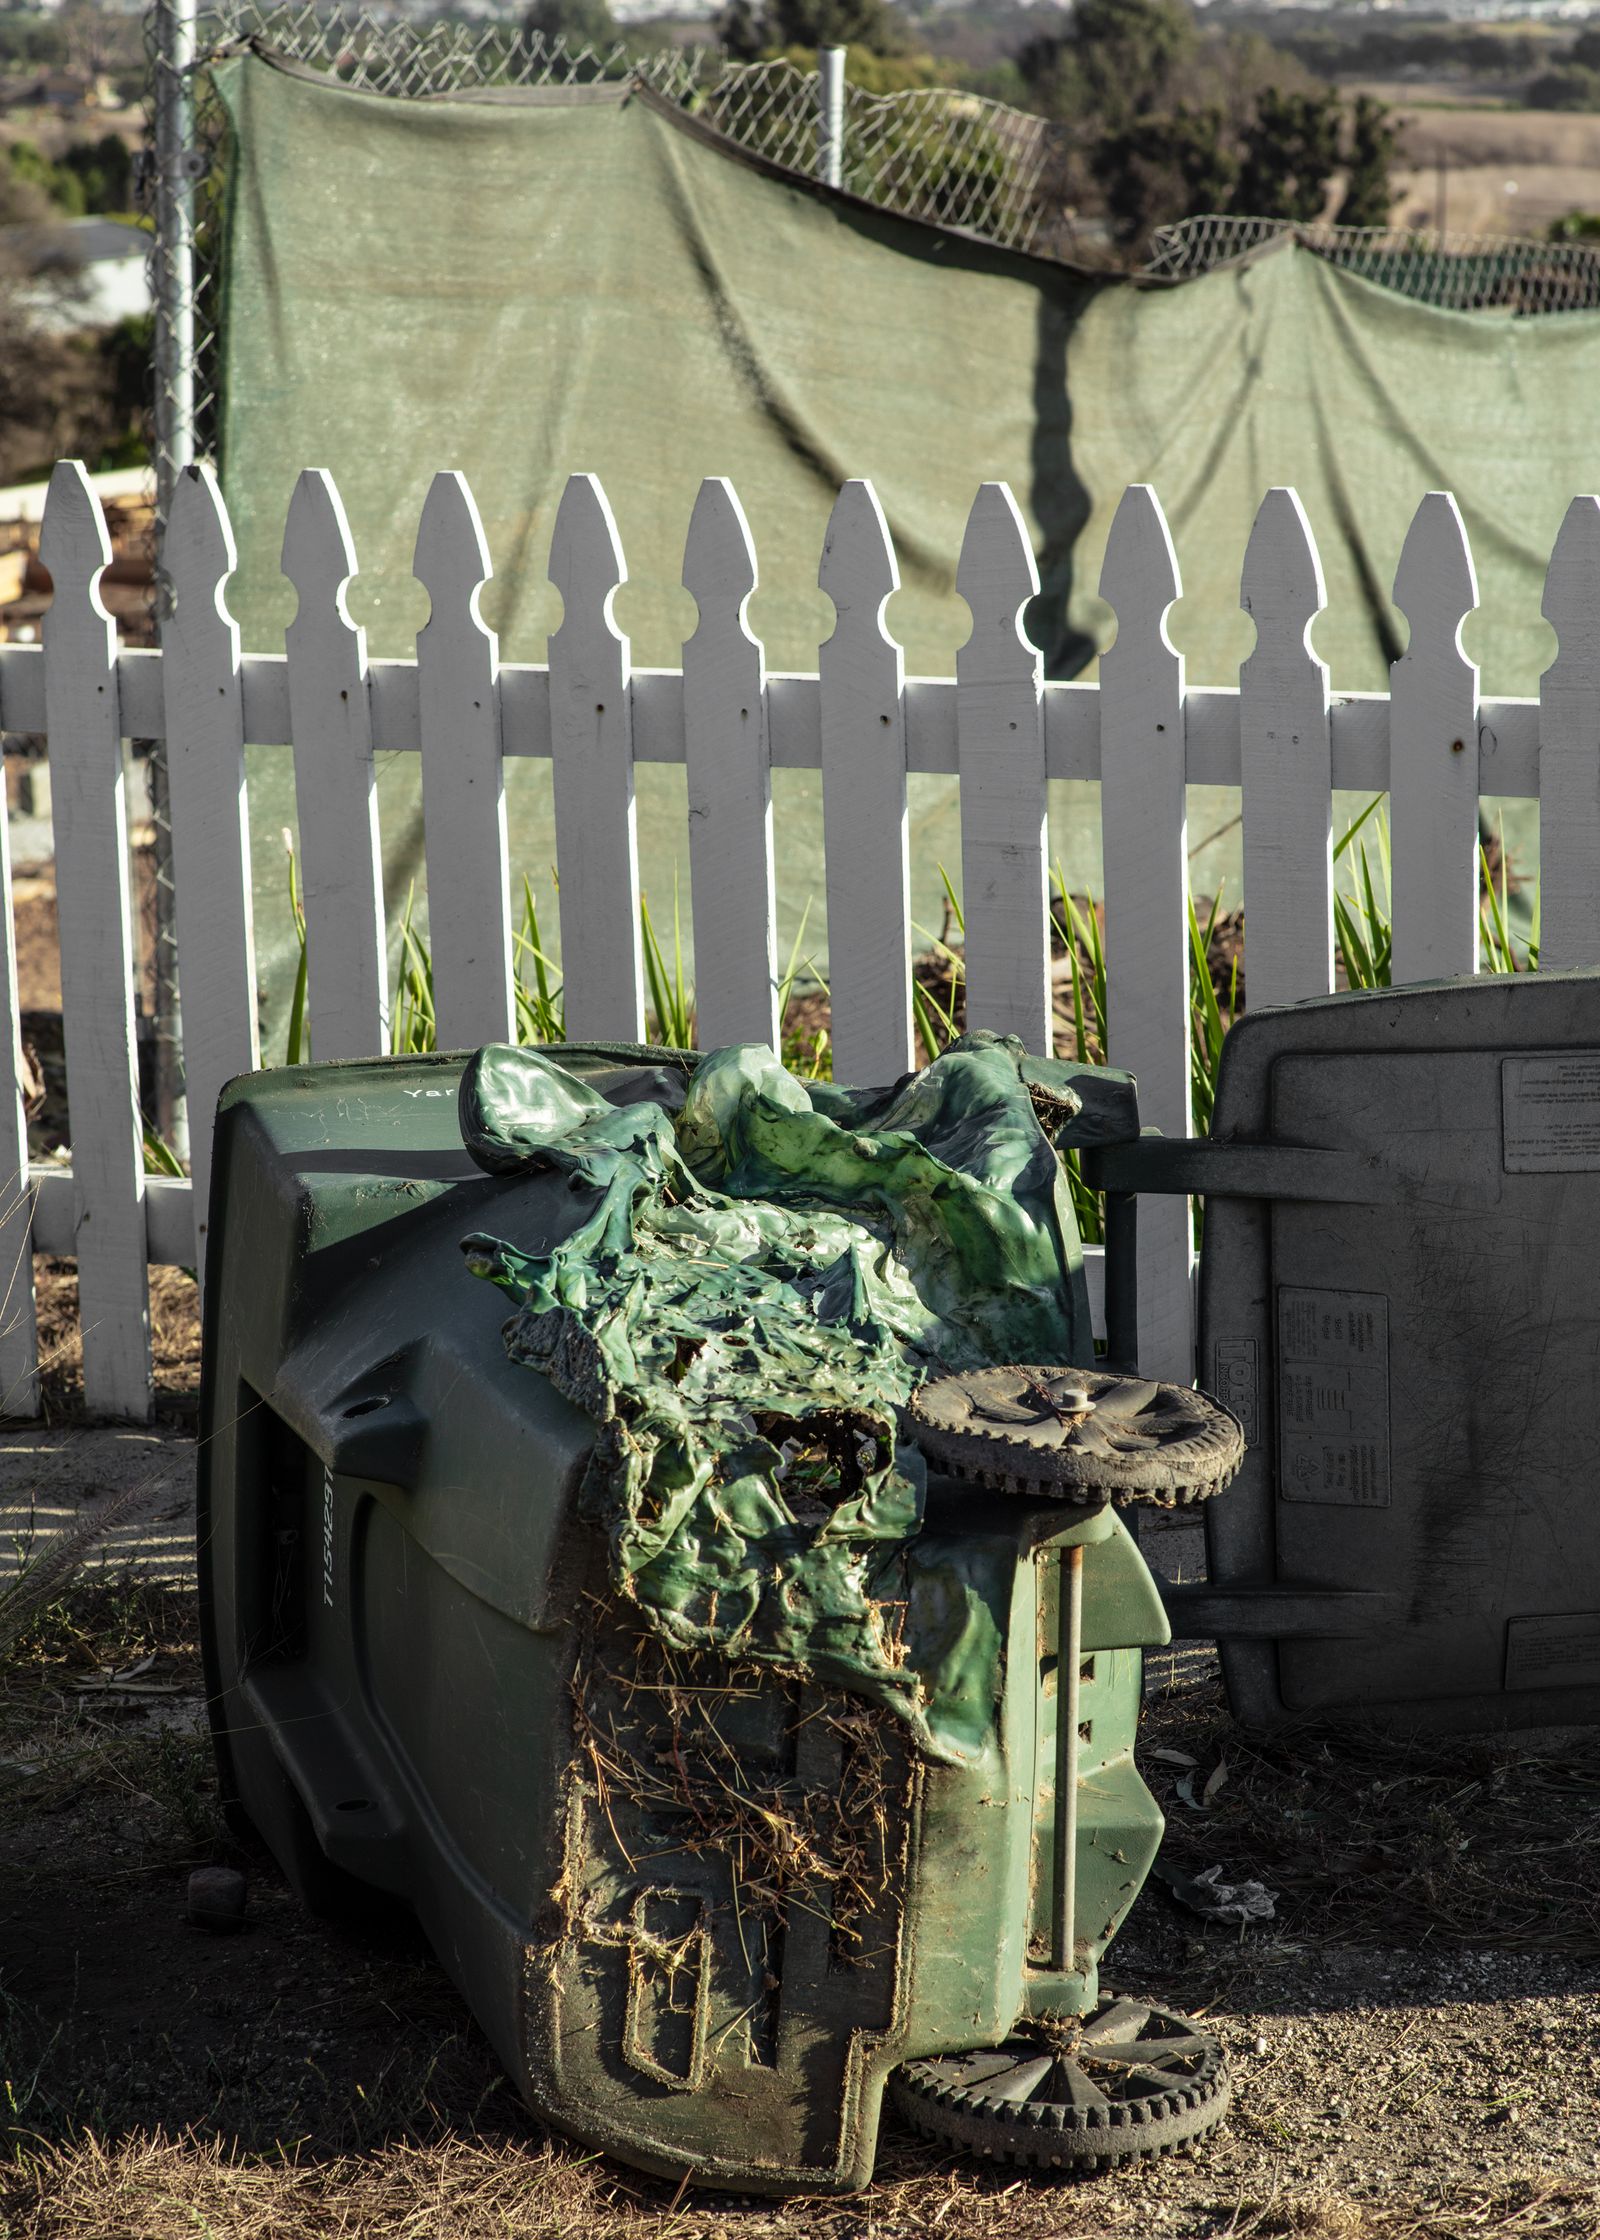 © Anastasia Samoylova - Damaged garbage container. Malibu, CA